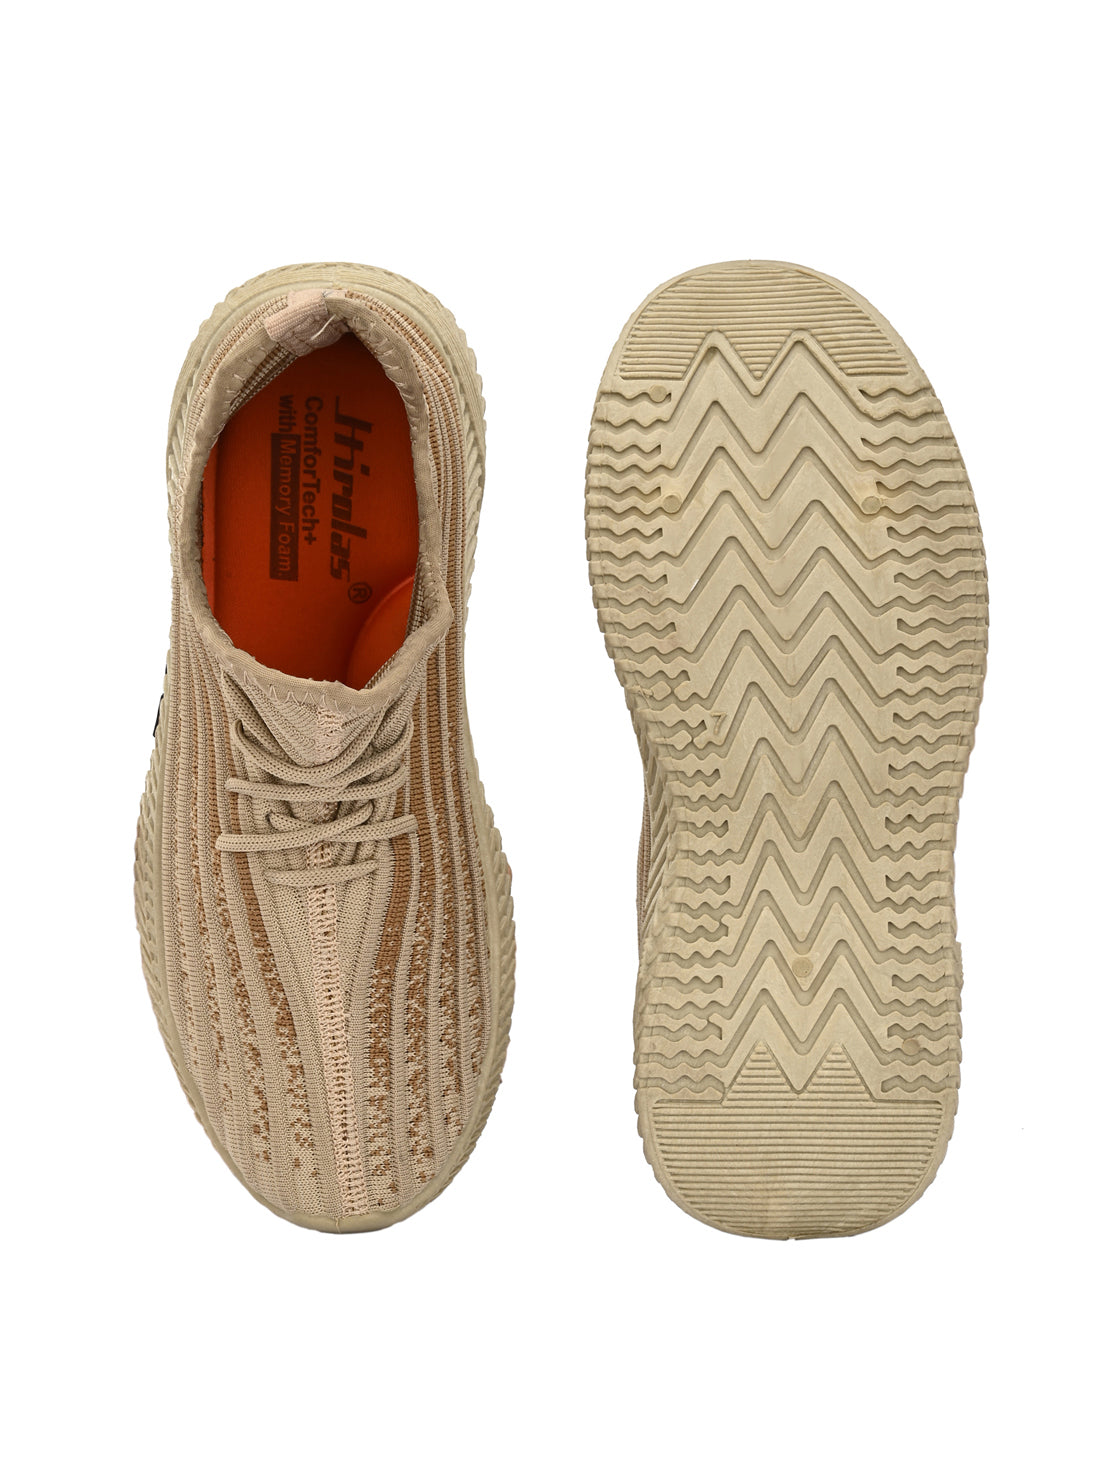 Hirolas® Men's Beige Knitted Running/Walking/Gym Lace Up Sneaker Sport Shoes (HRL2036BGE)